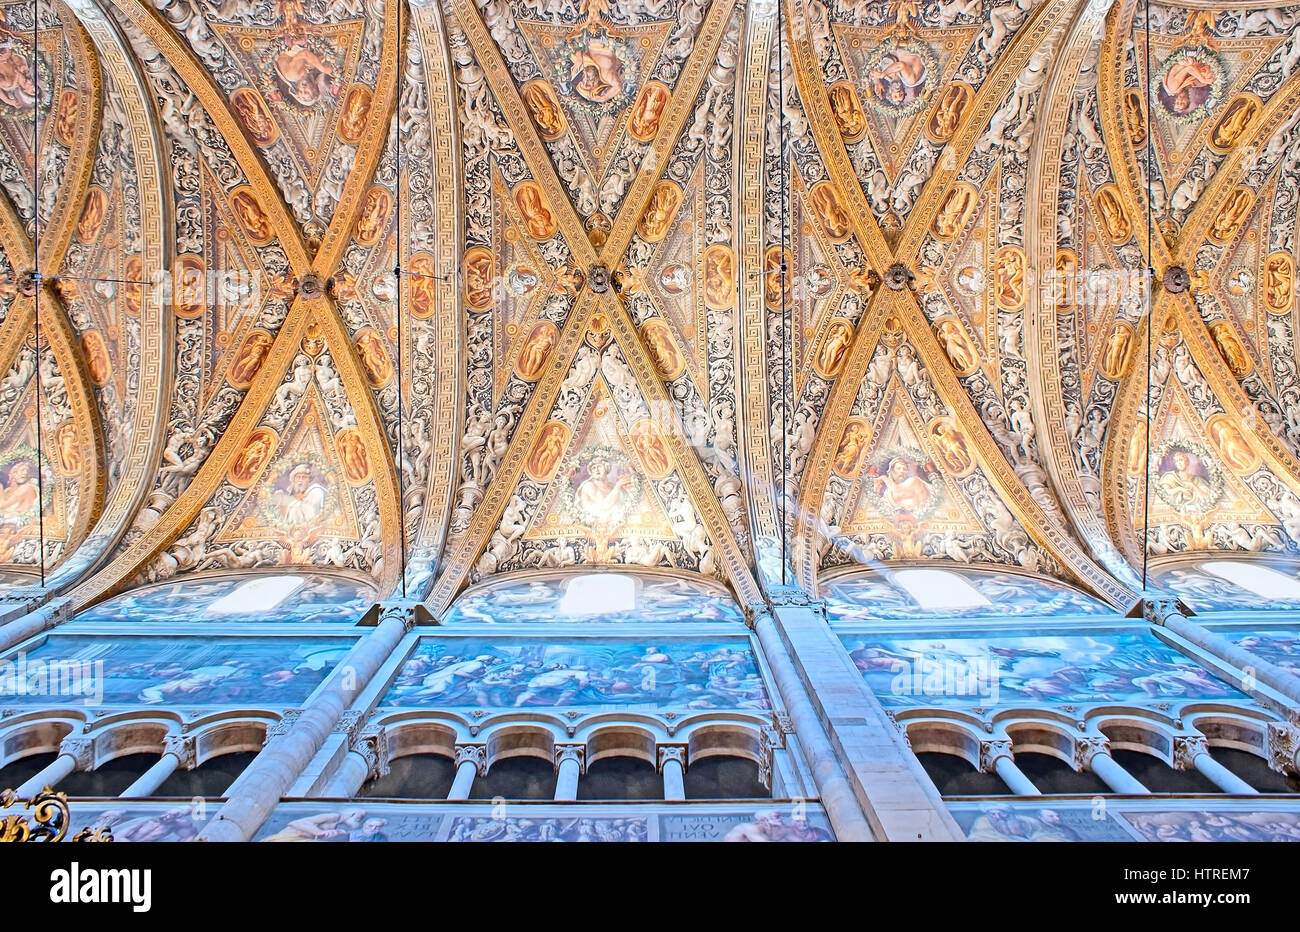 PARMA, Italien - 24. April 2012: Die komplexe Muster an der Decke im Duomo (Kathedrale), am 24. April in Parma. Stockfoto